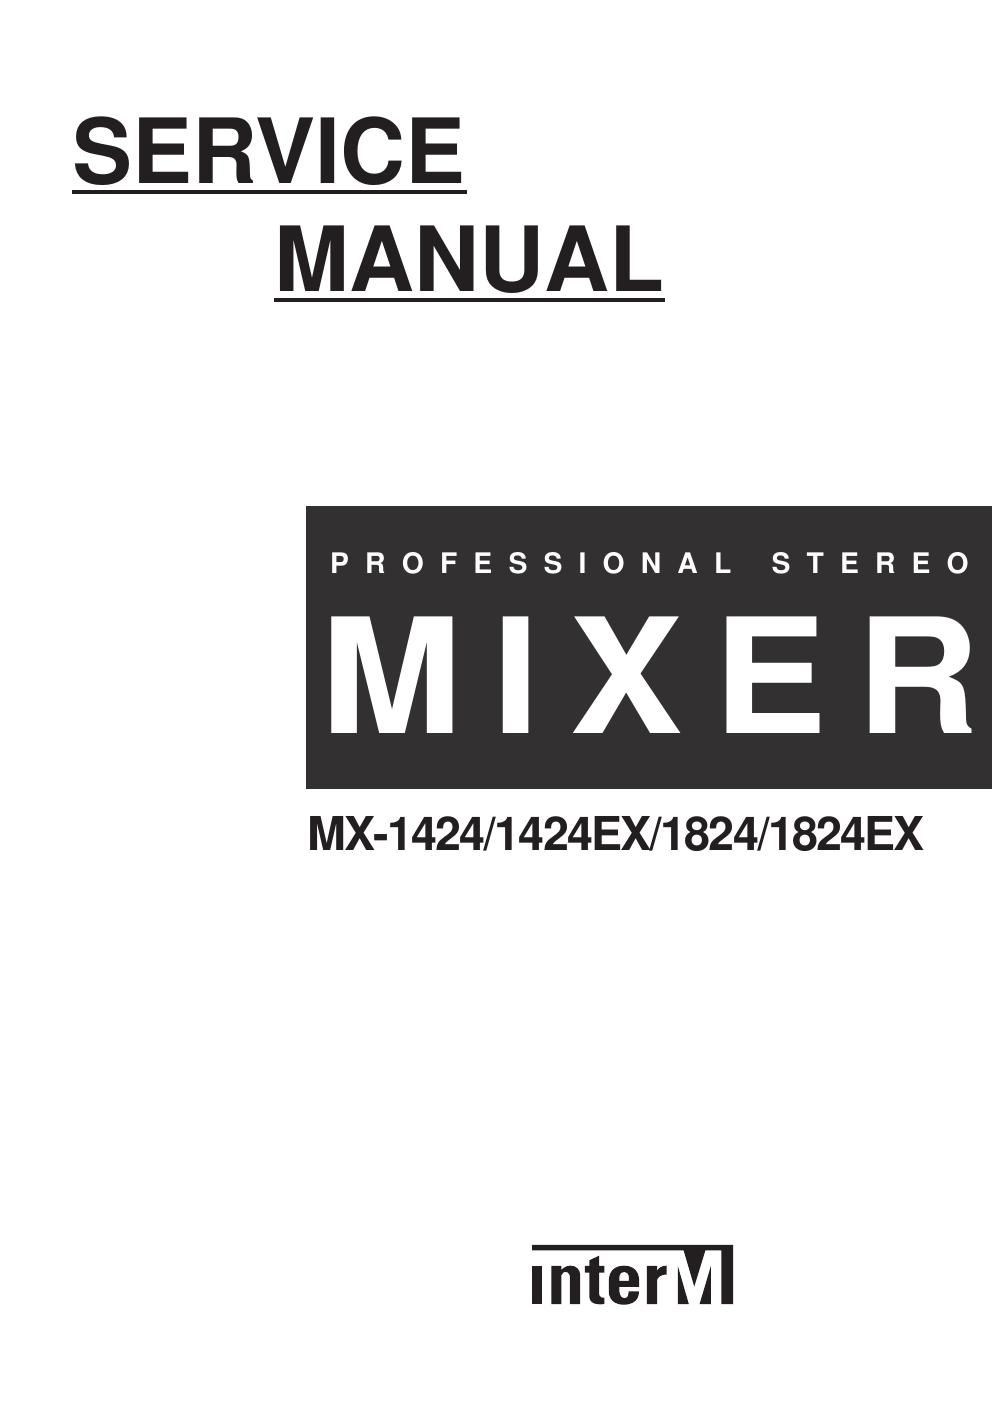 interm mx 1424 service manual